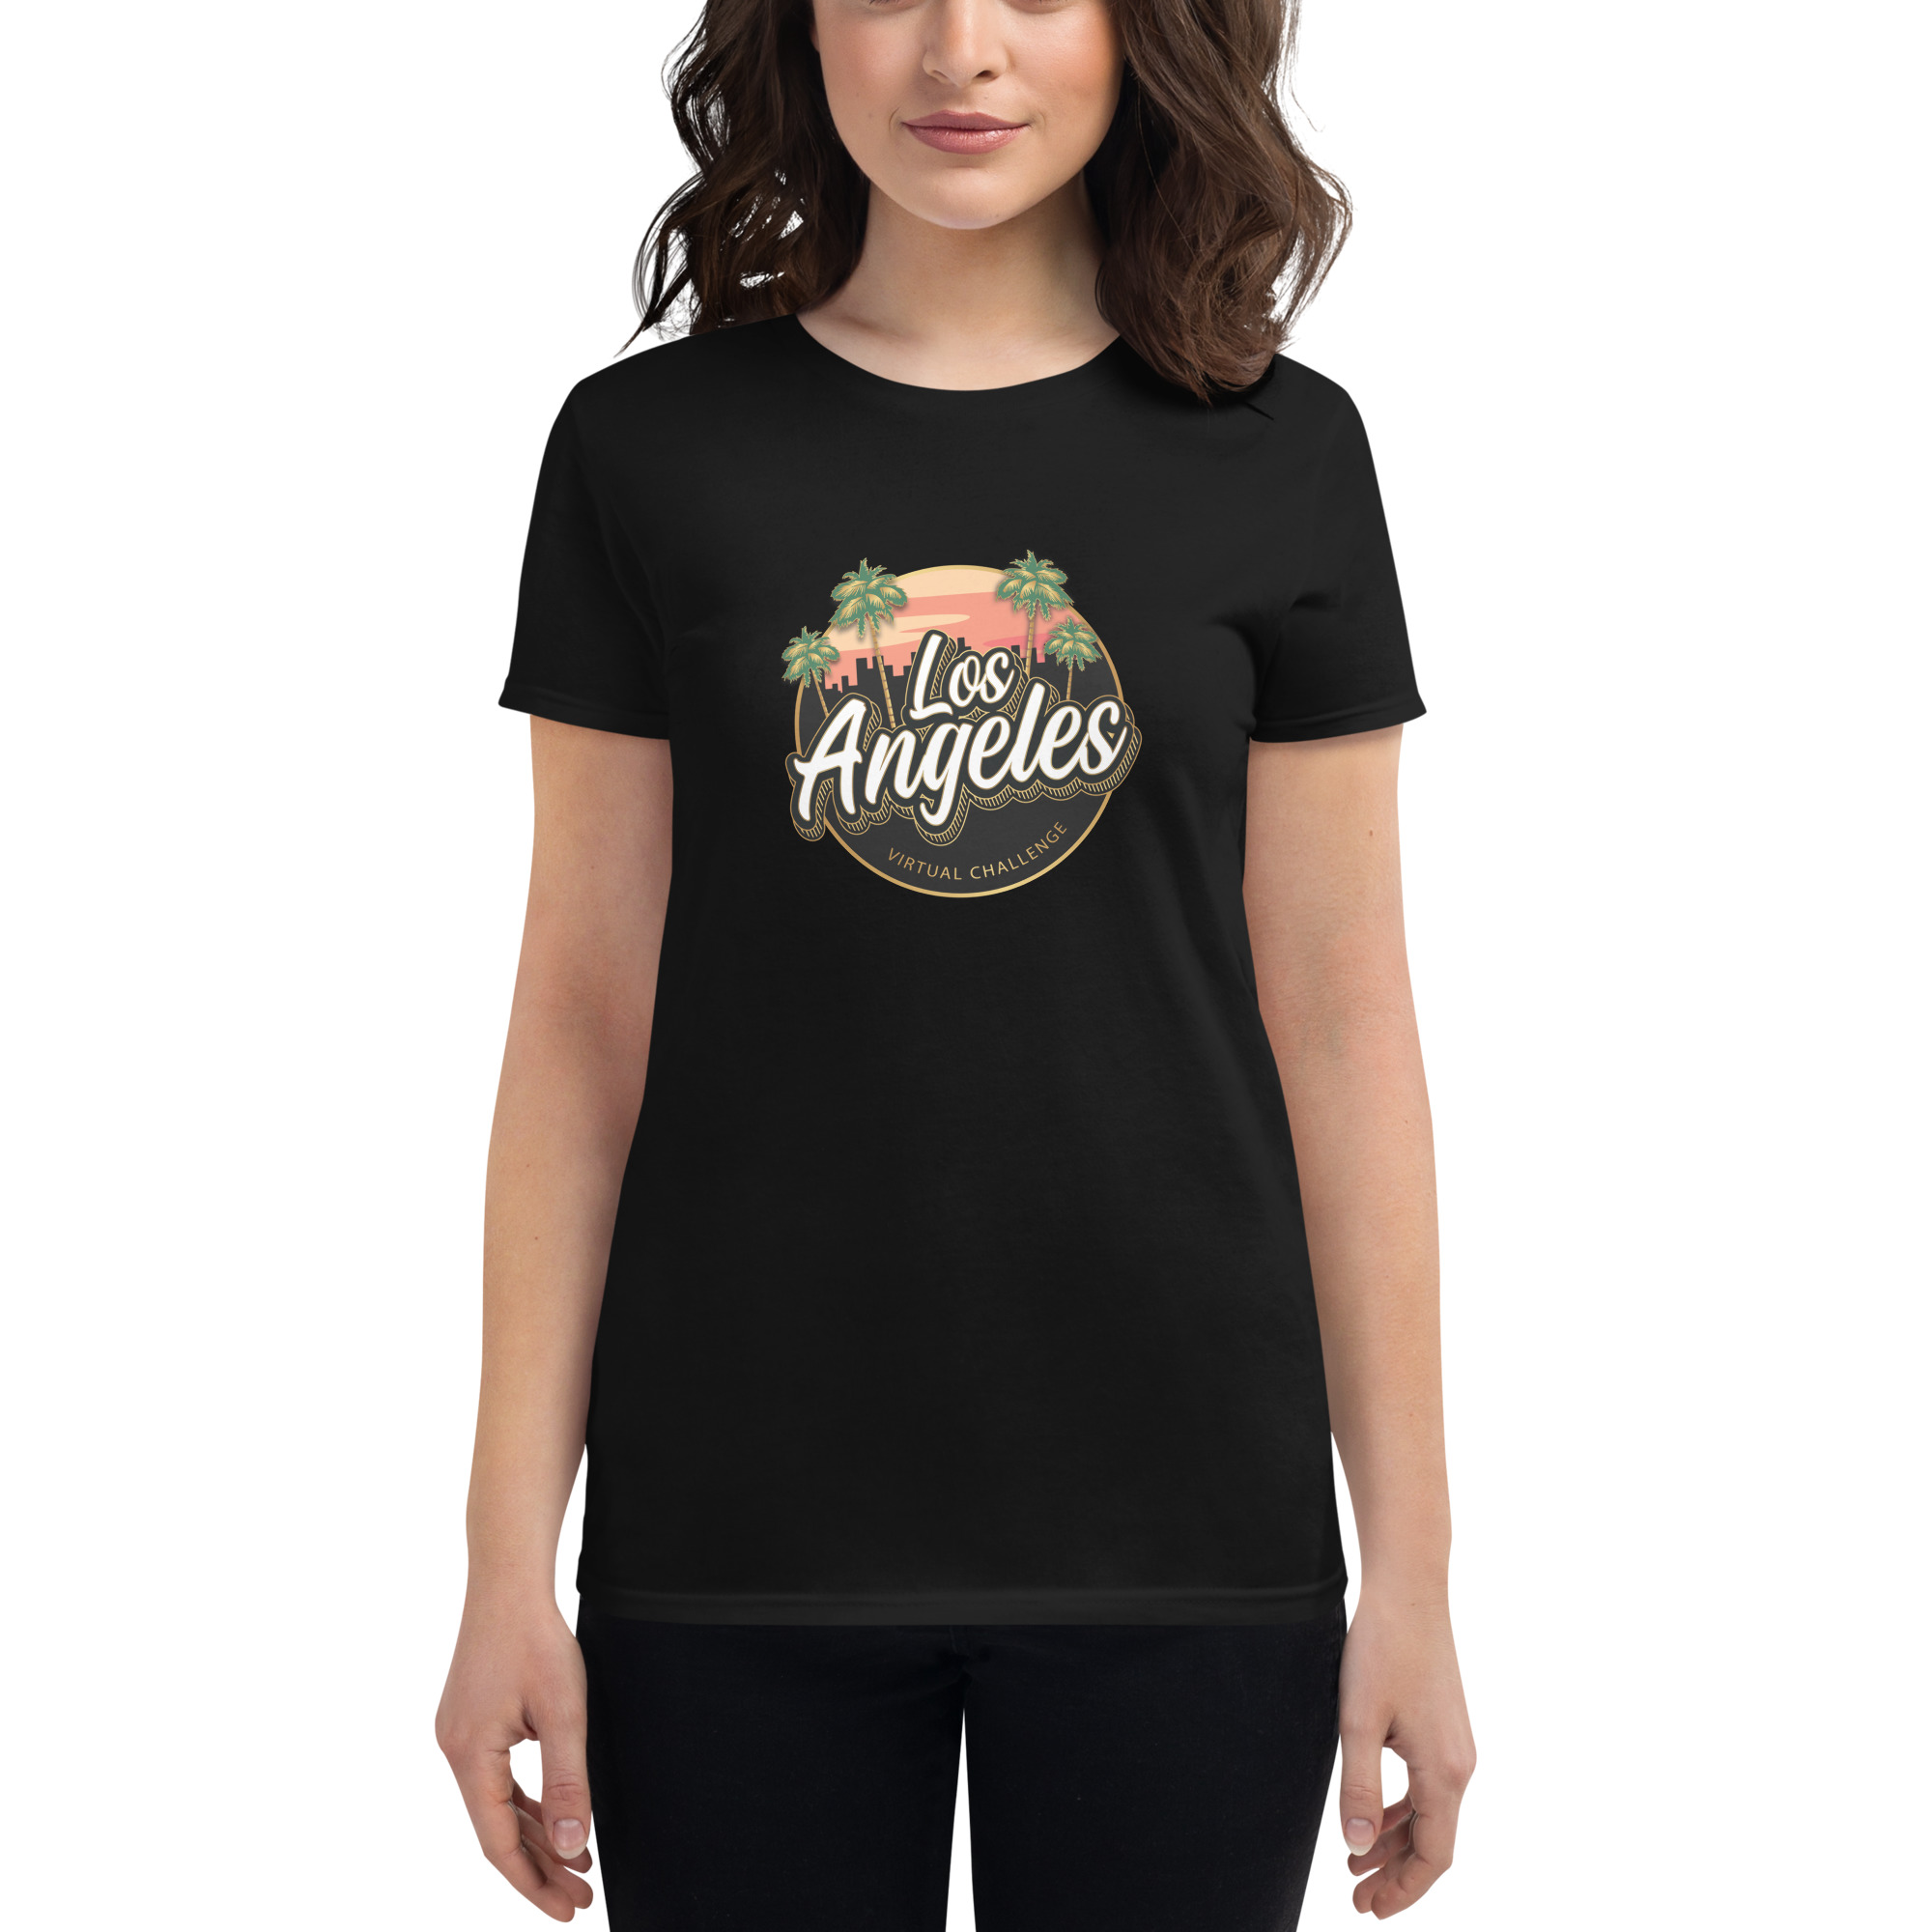 Los Angeles Virtual Challenge, Women's short sleeve t-shirt